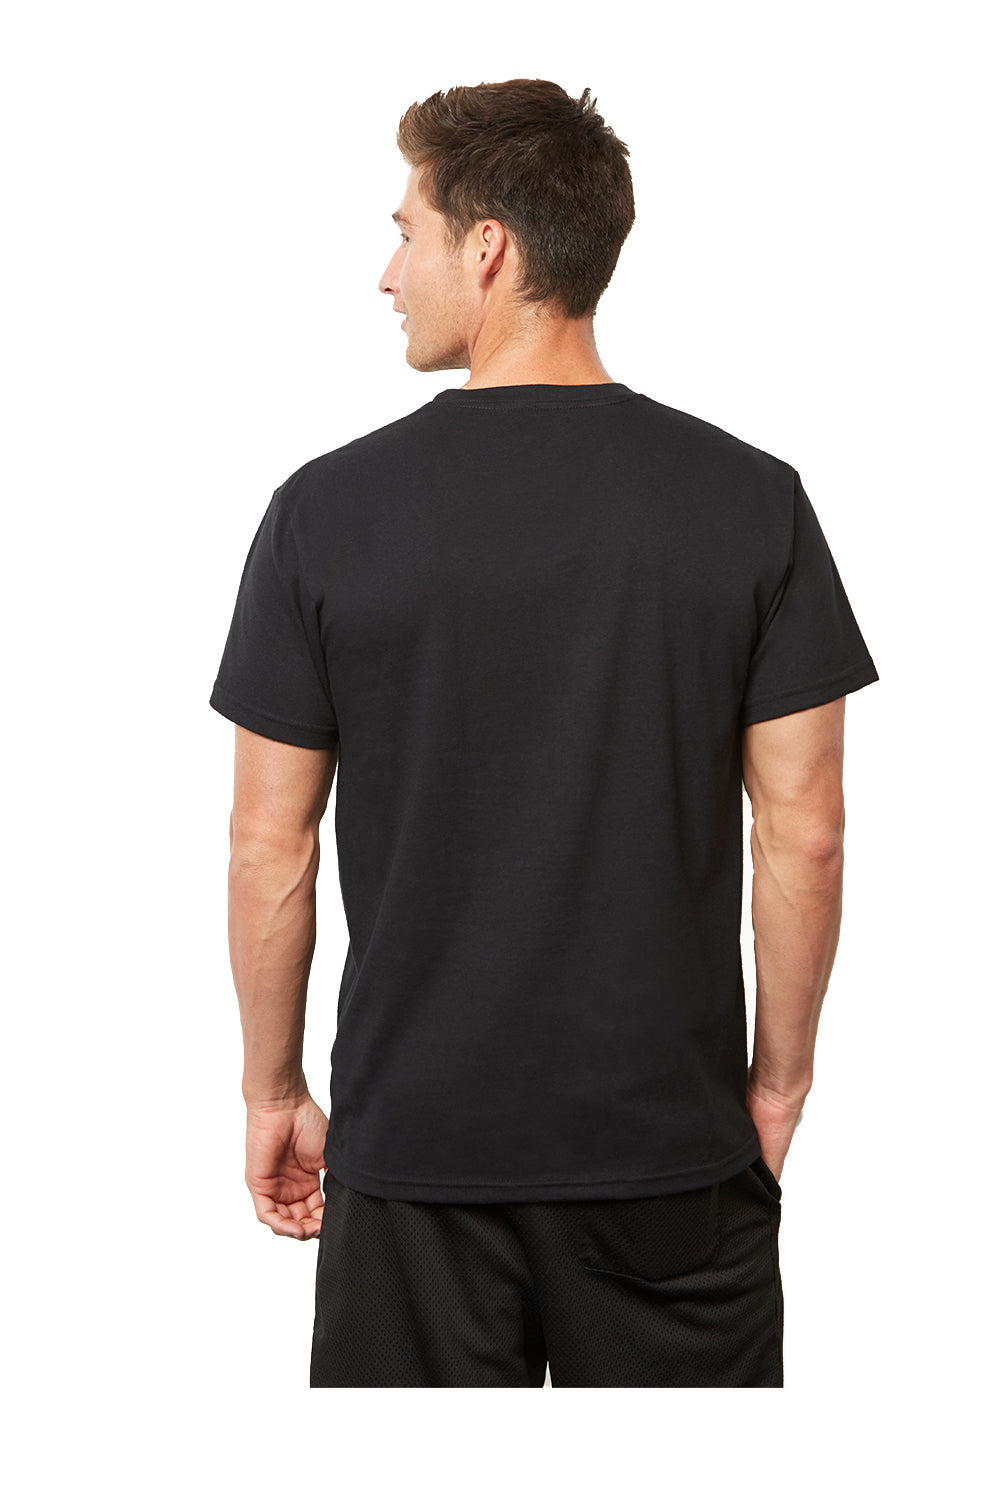 Next Level 4600 Mens Eco Short Sleeve Crewneck T-Shirt Black Back